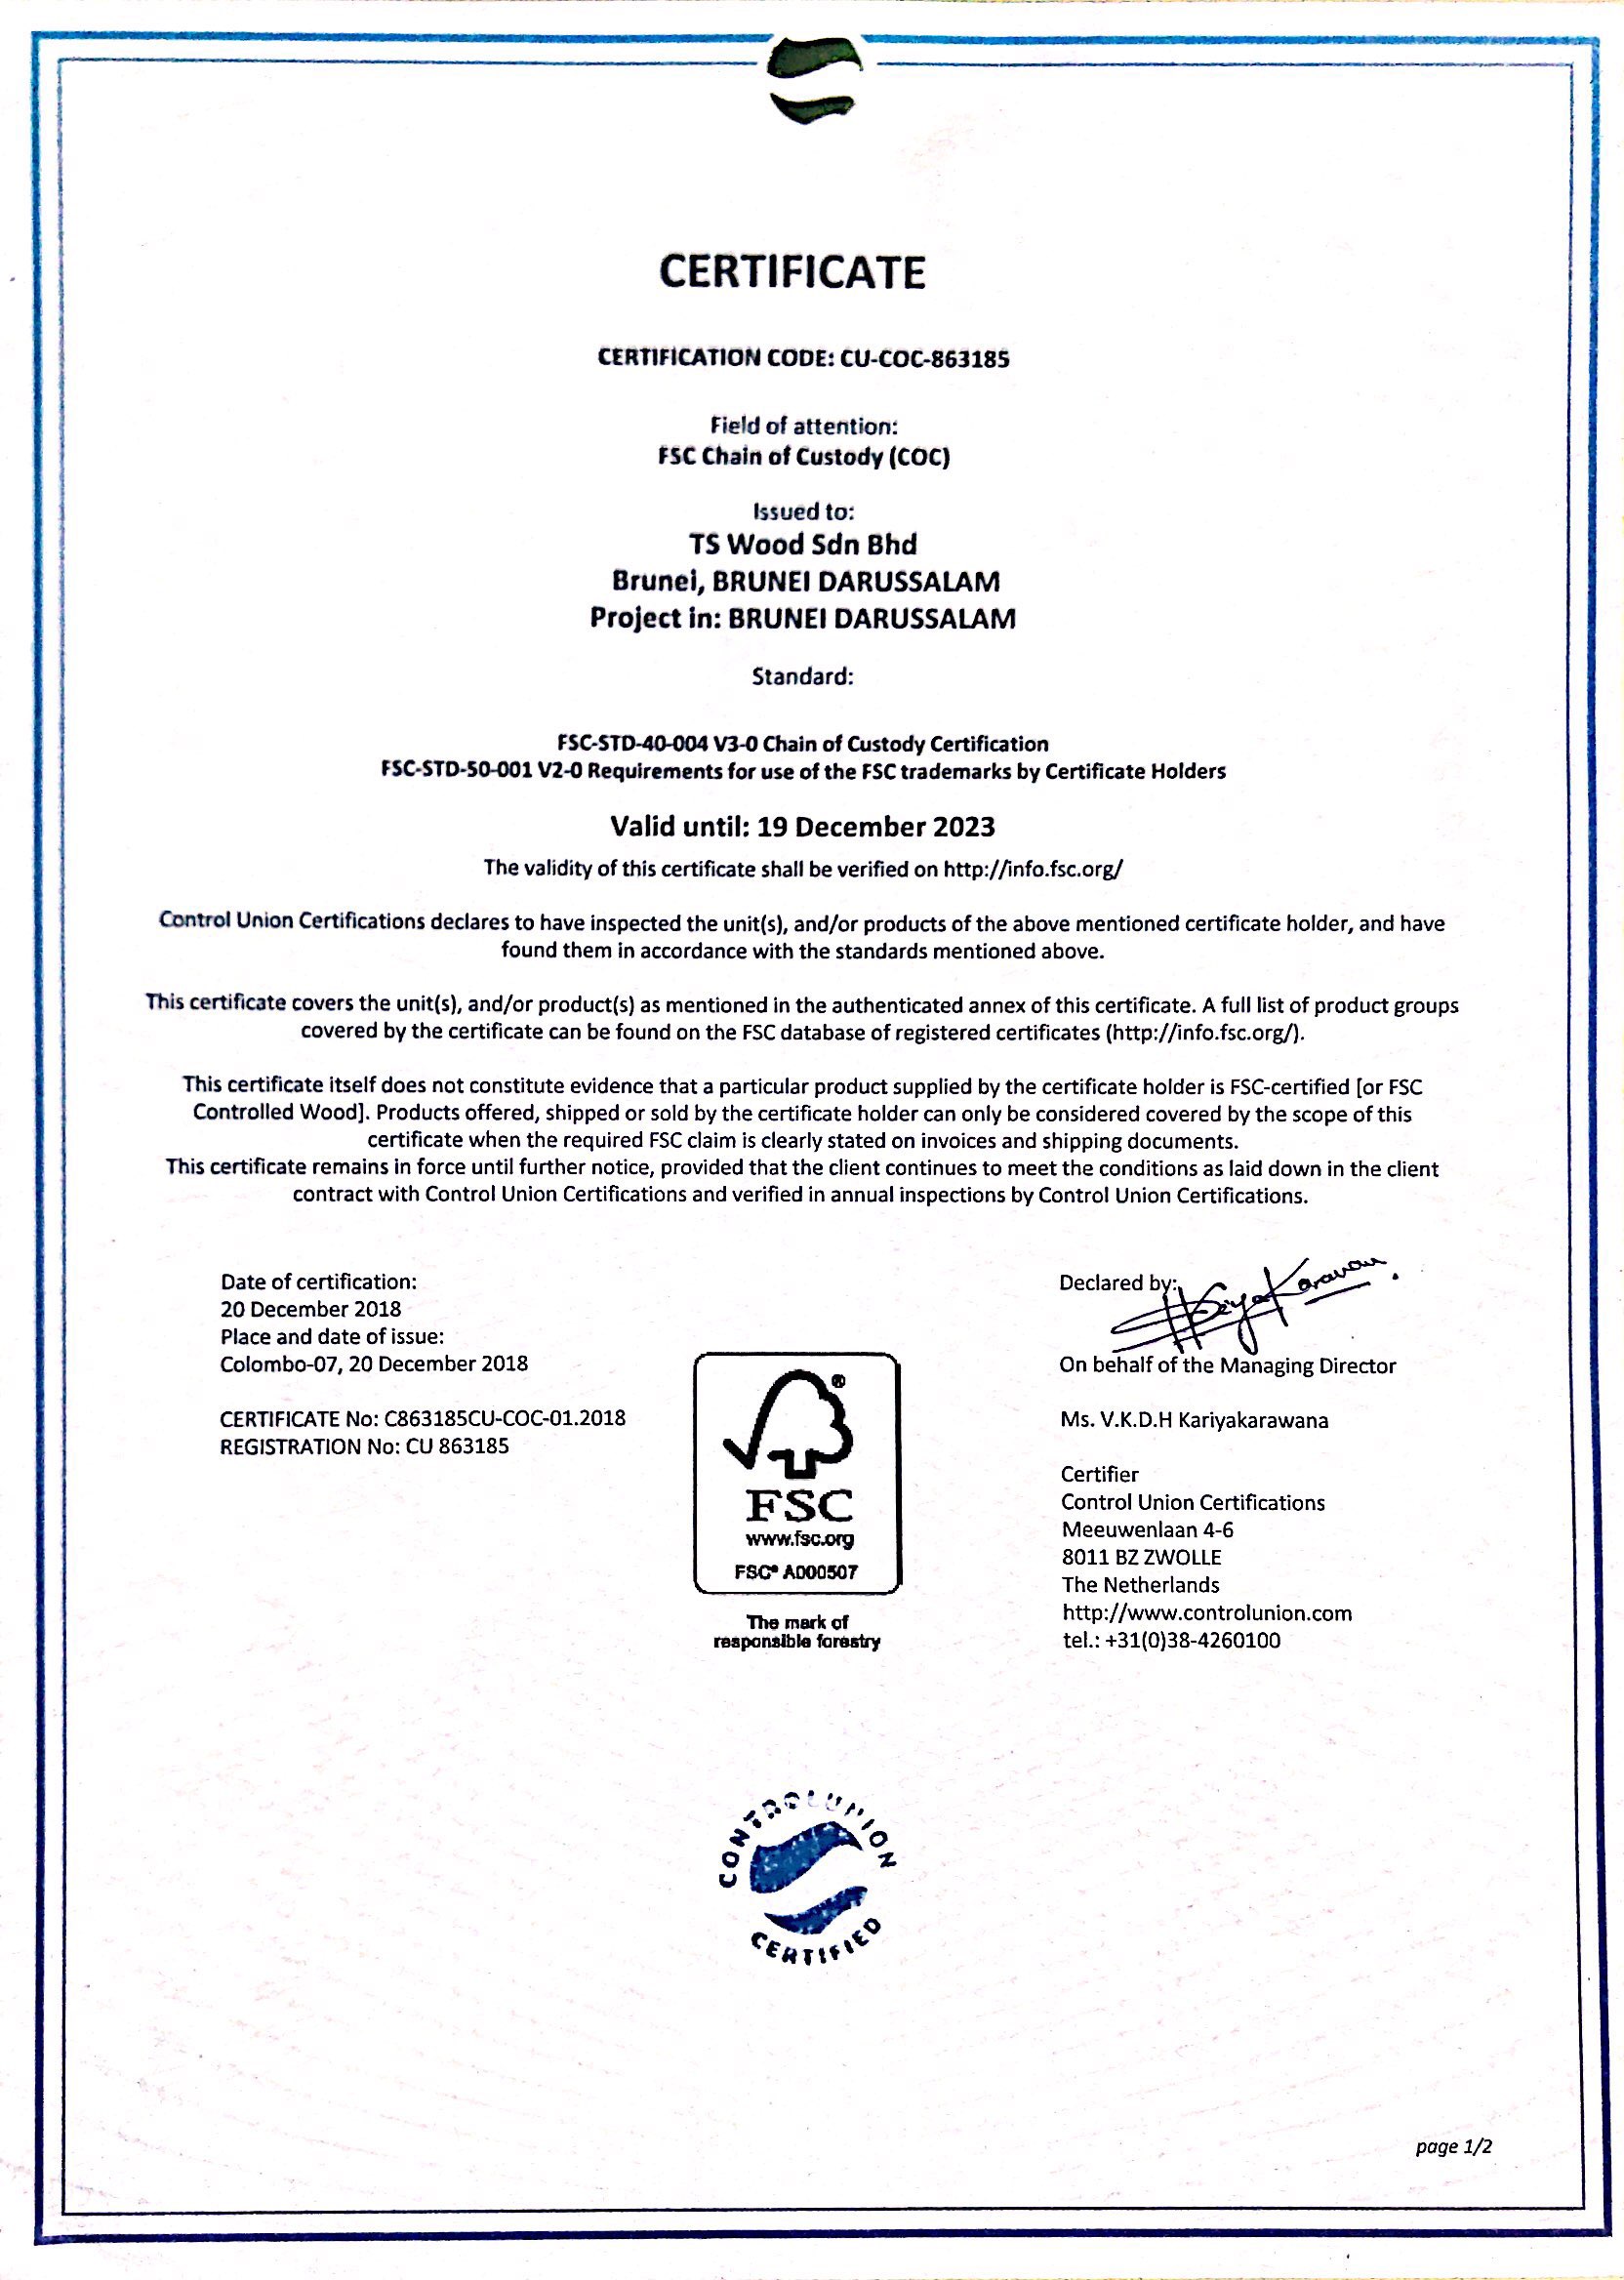 Borneo TS Wood Certification